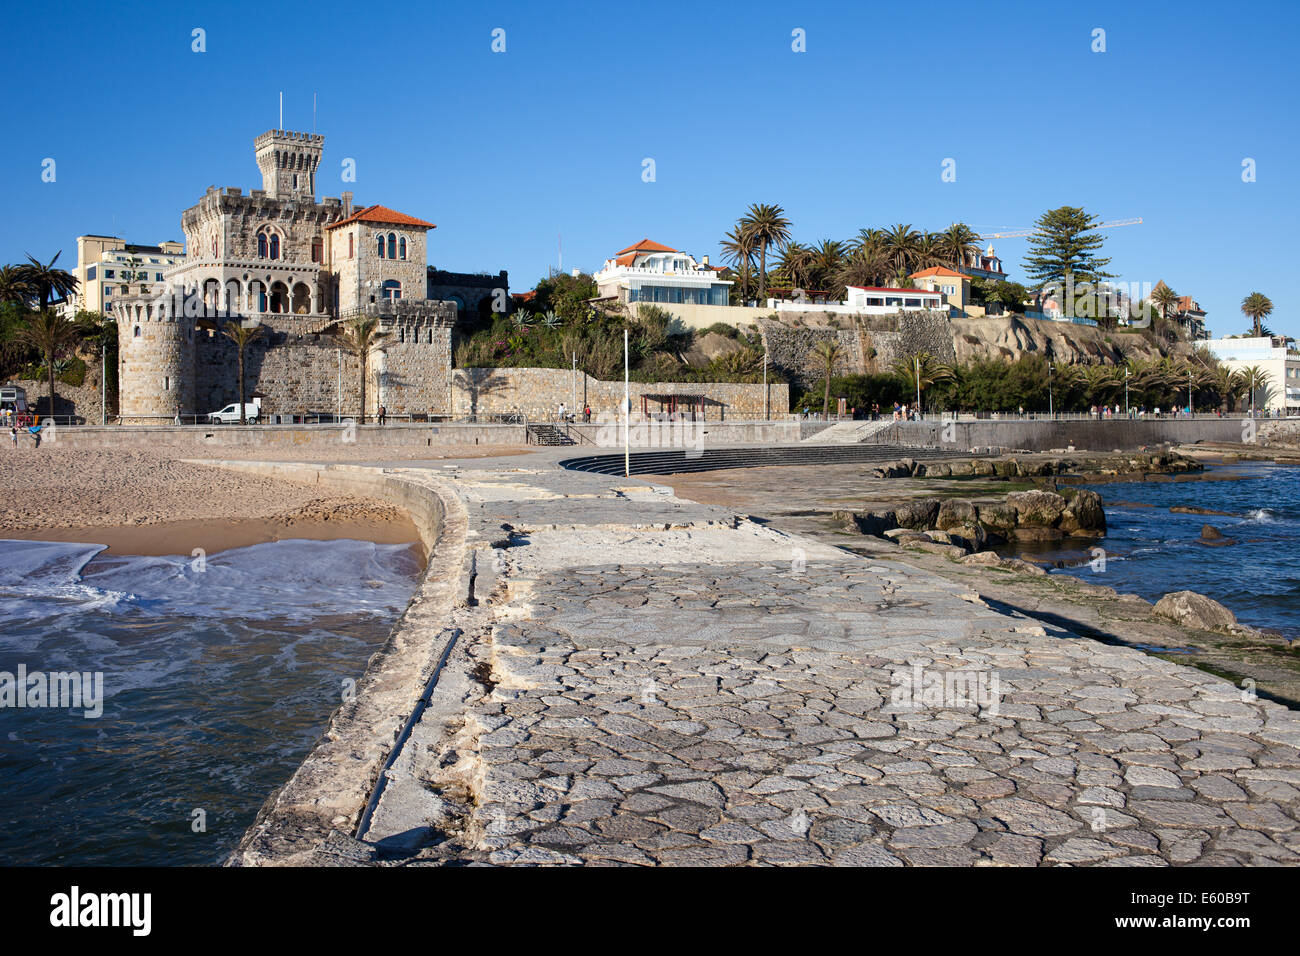 Resort town of Estoril in Portugal. Stock Photo